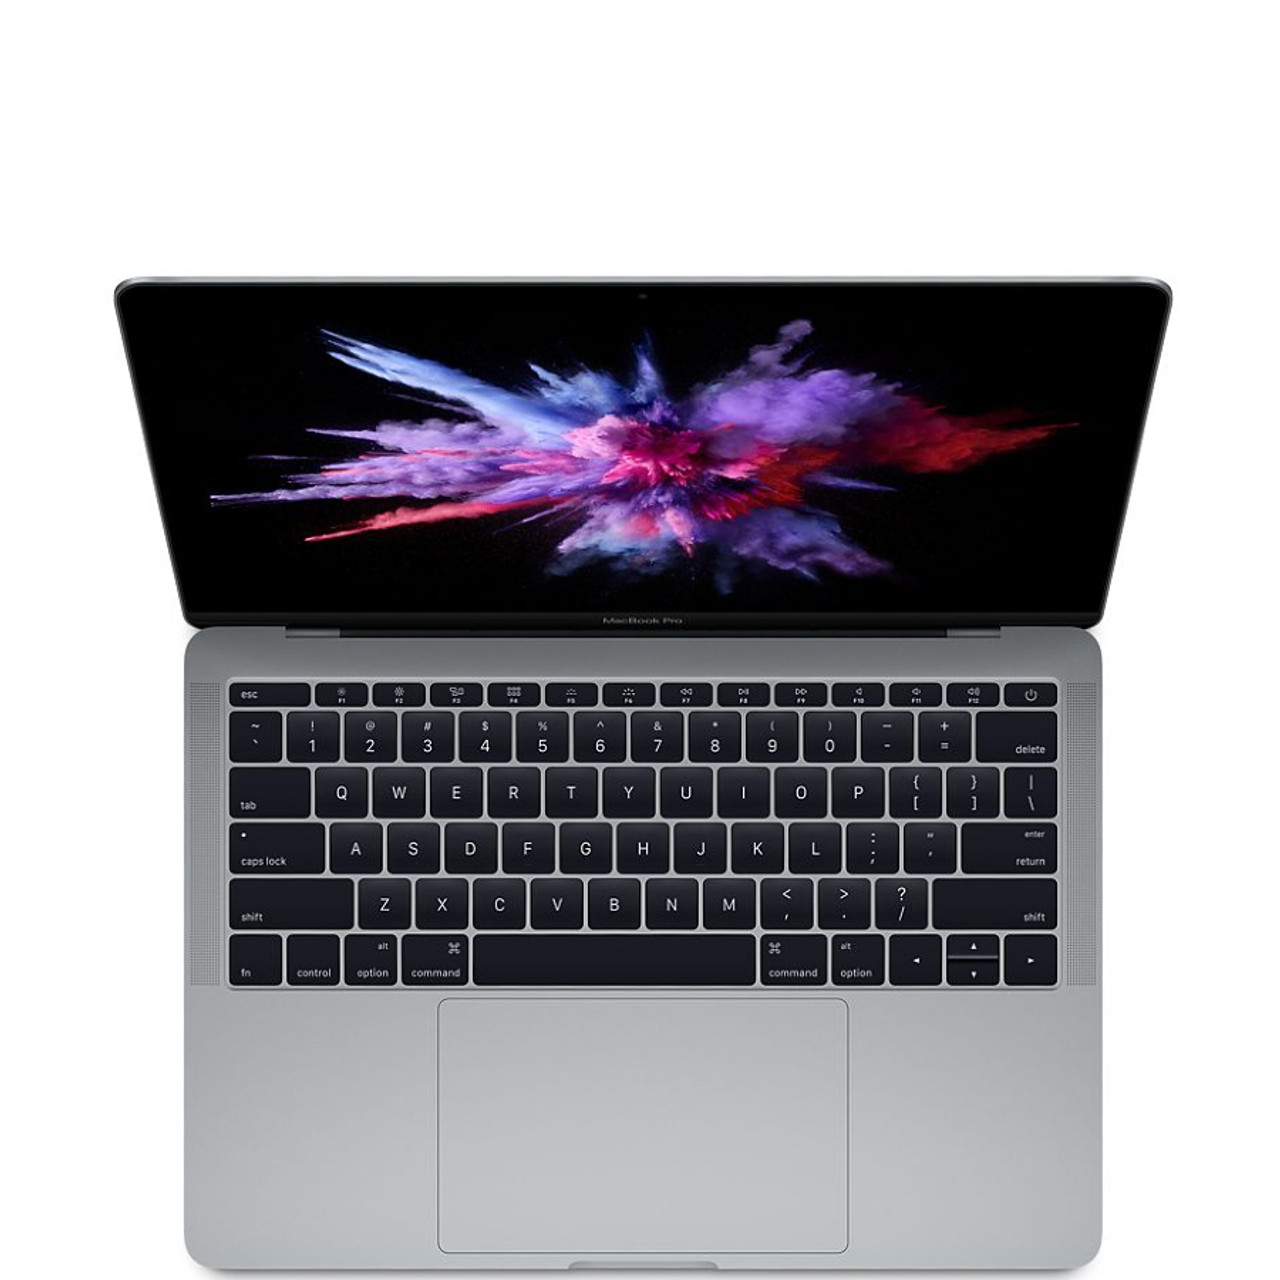 Apple MacBook Pro 13-inch 2.3GHz Core i5 (Mid 2017)